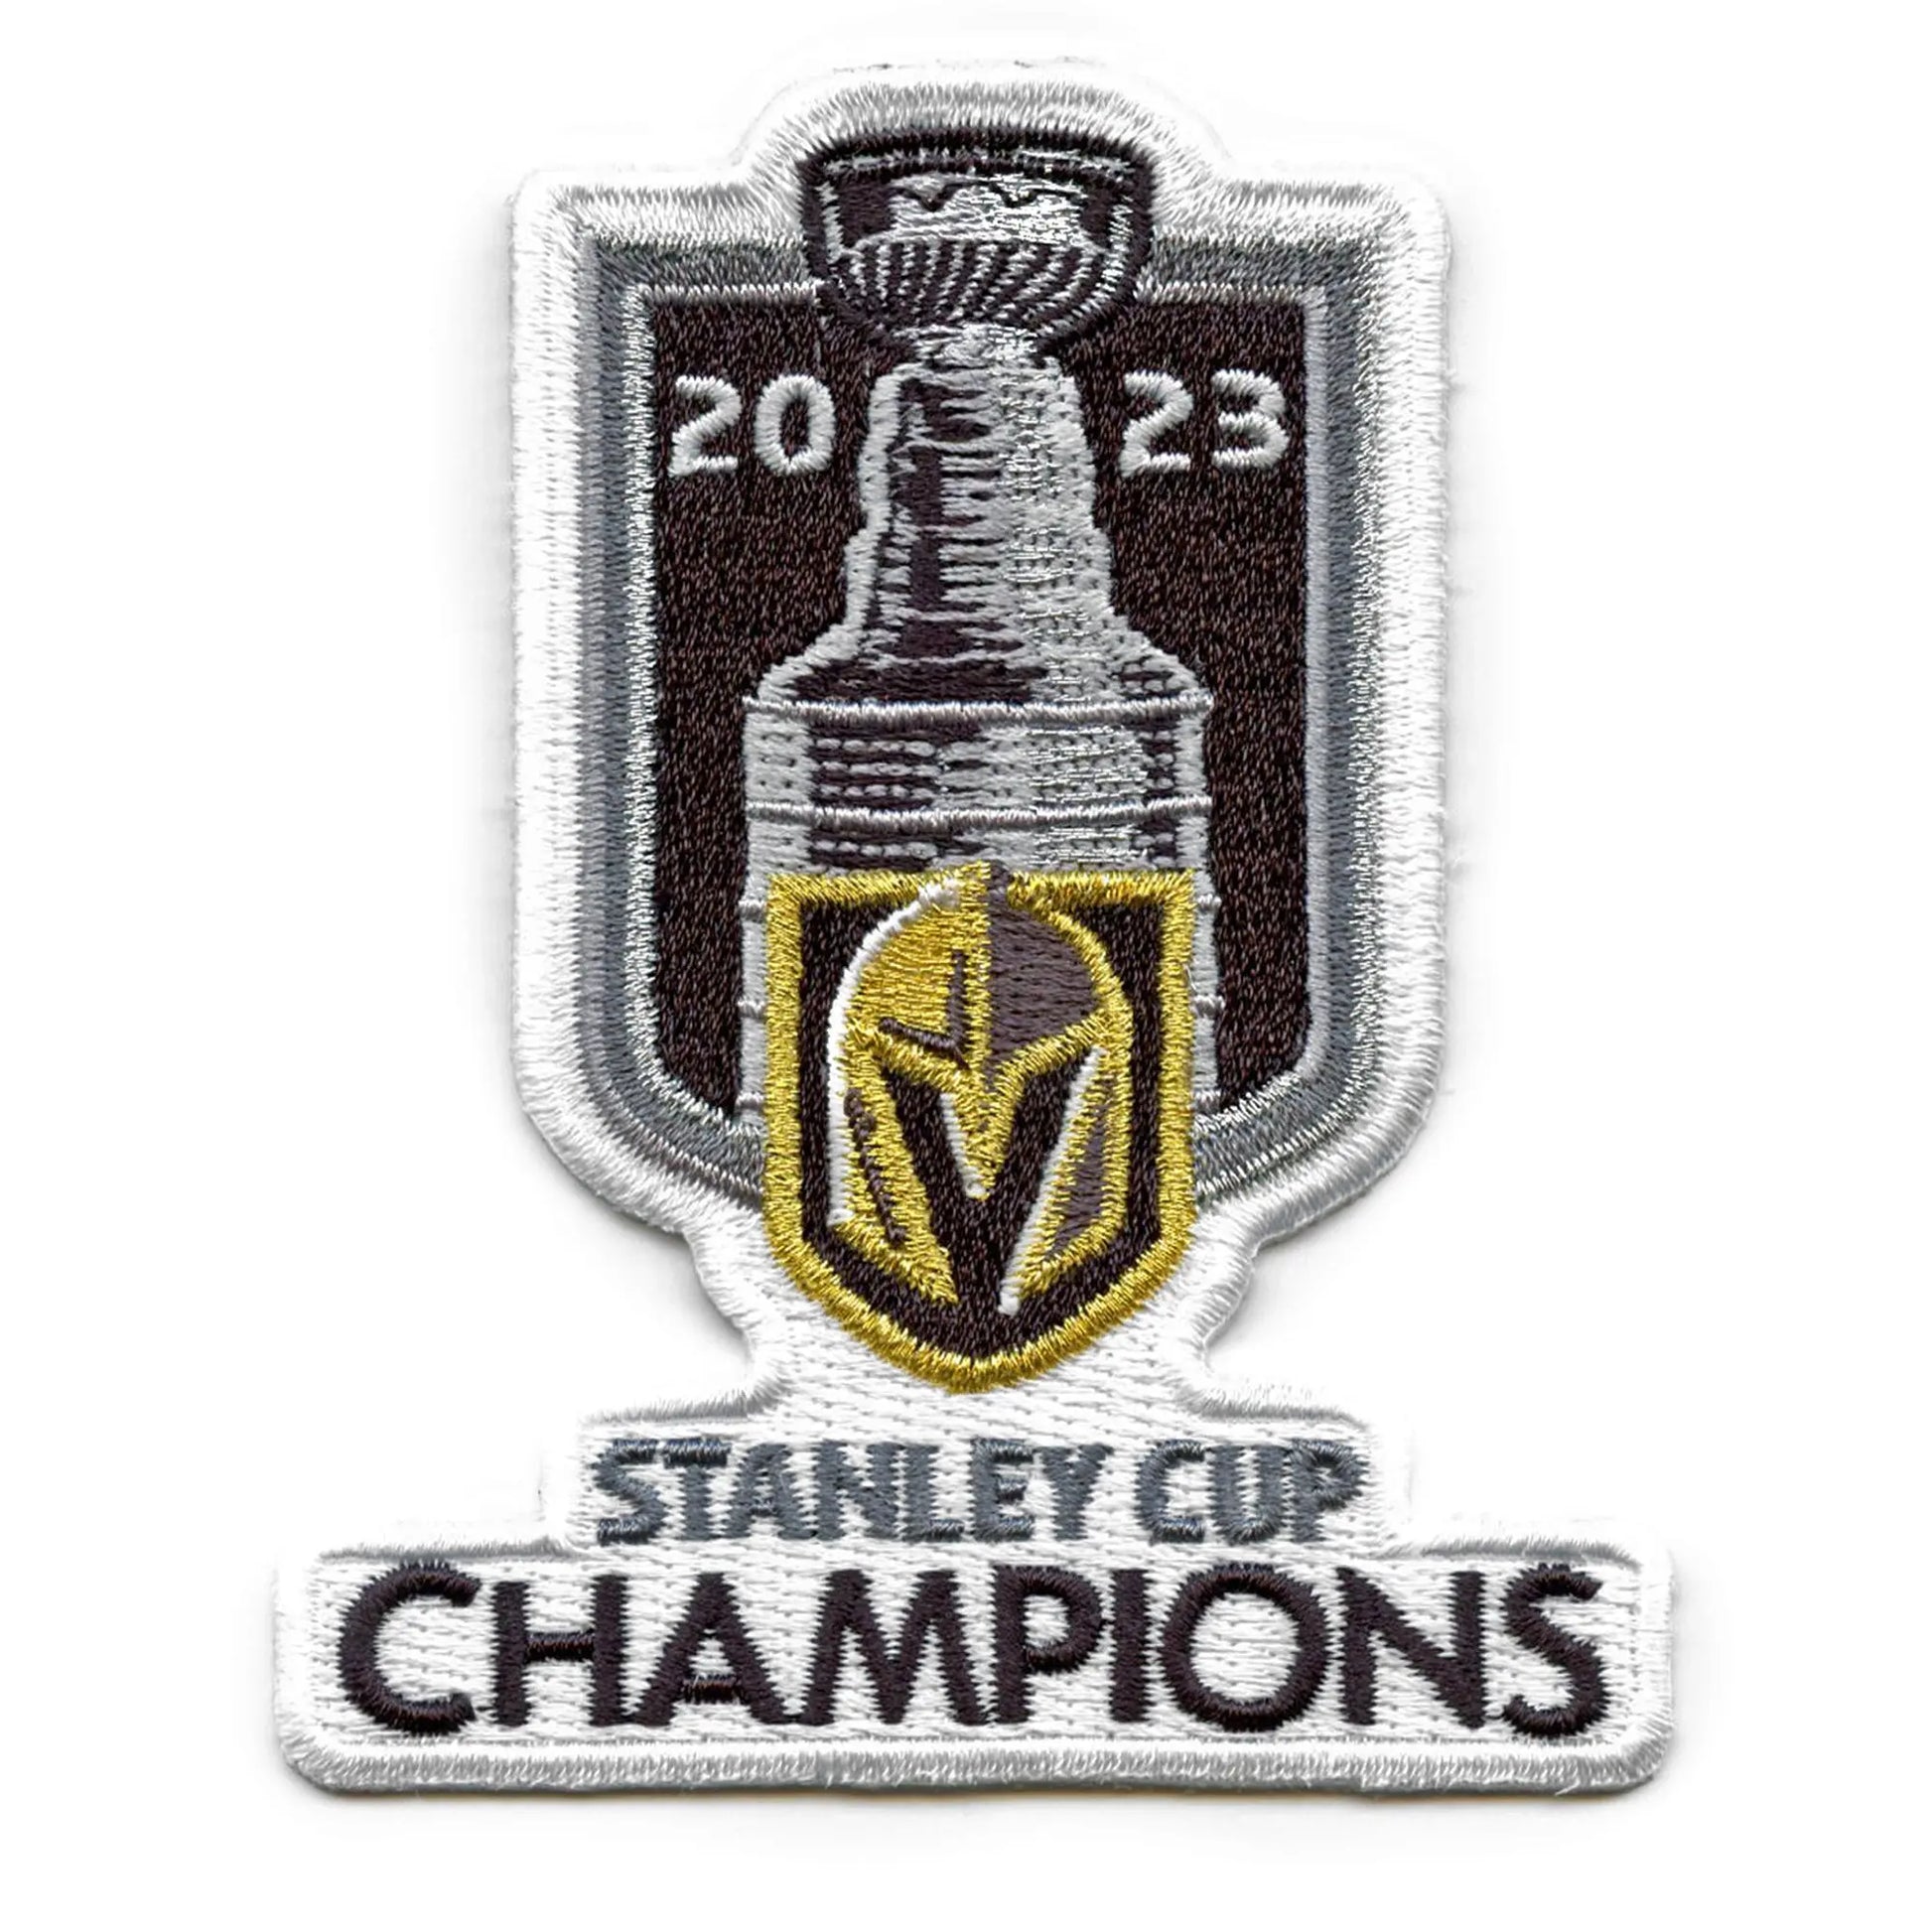 Vegas Golden Knights 2023 Stanley Cup Final Custom Jersey - All Stitch